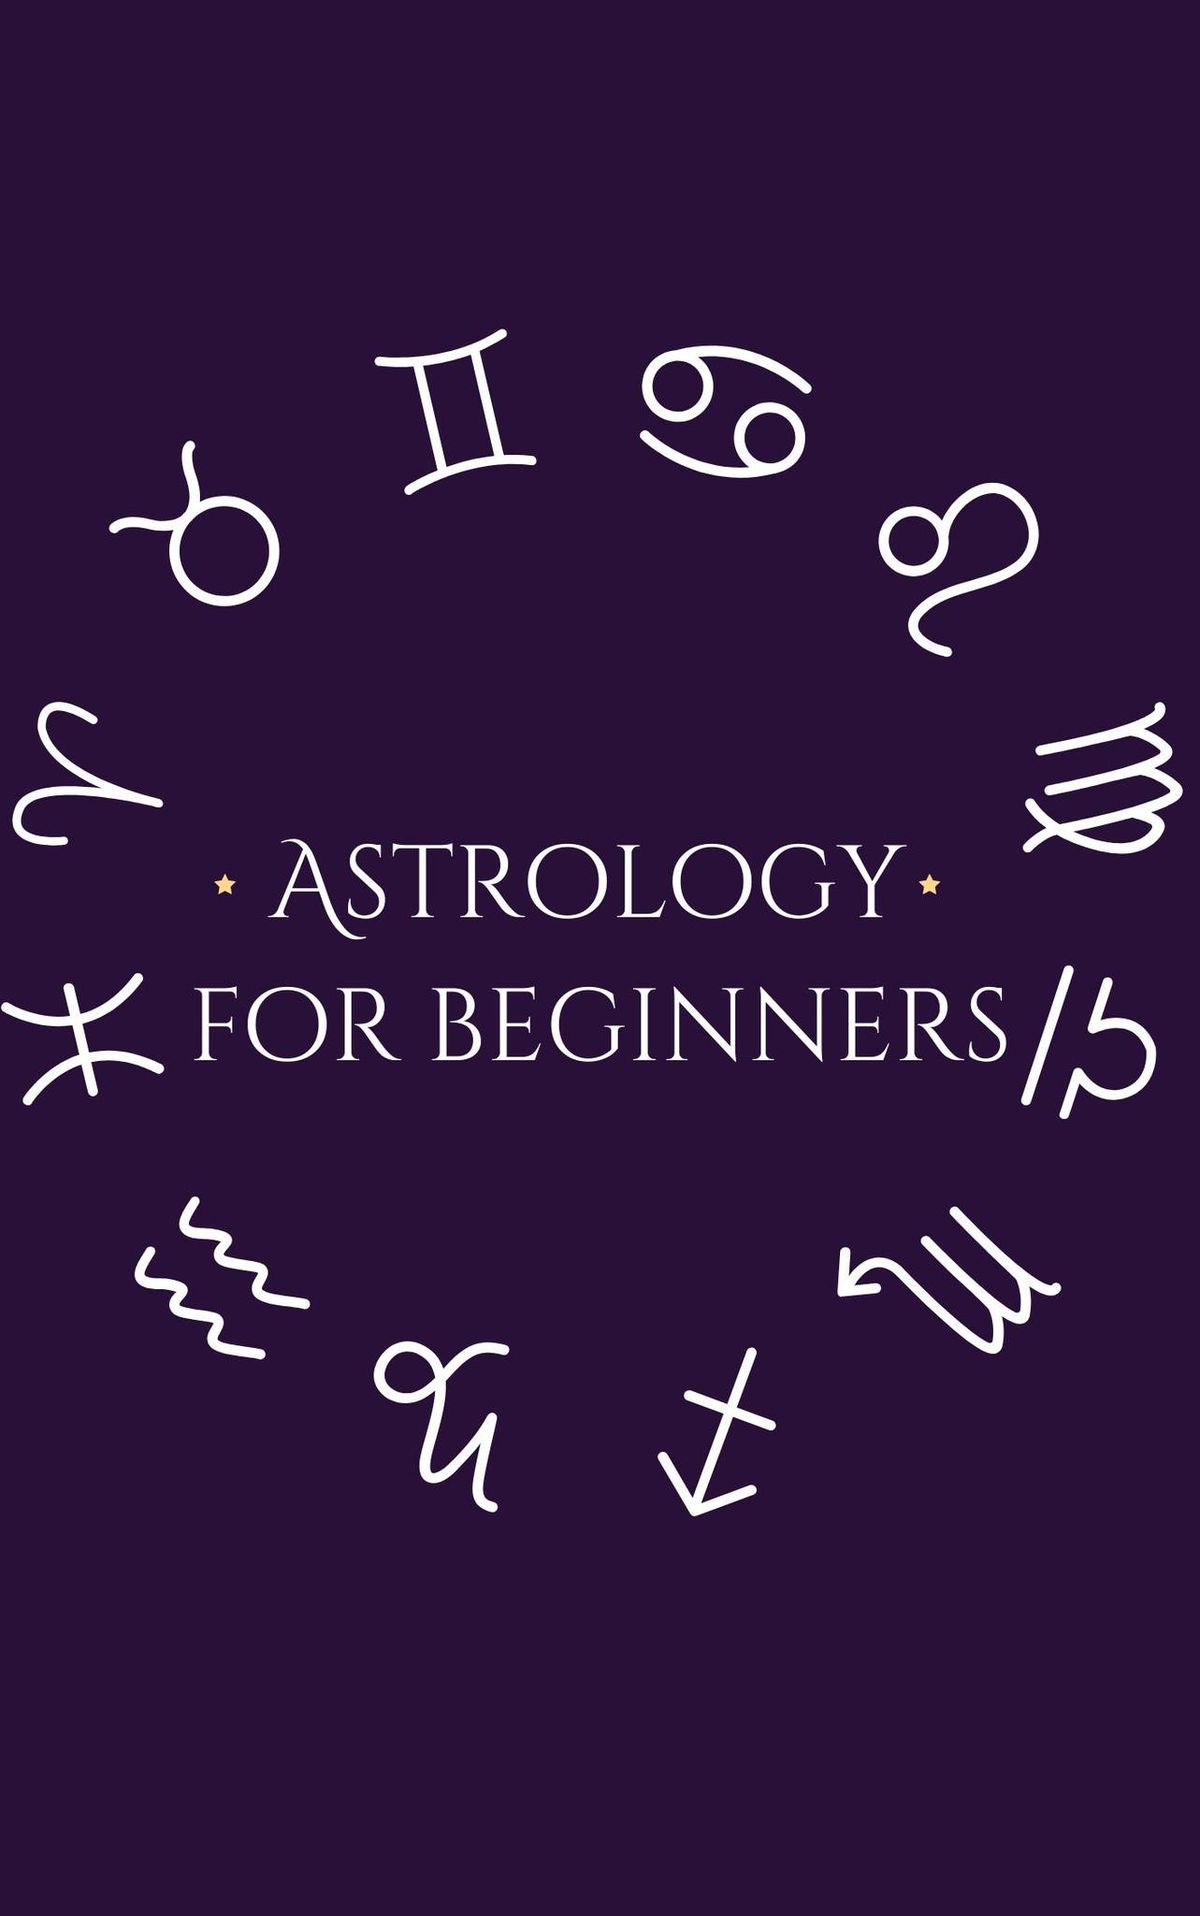  Astrology 101